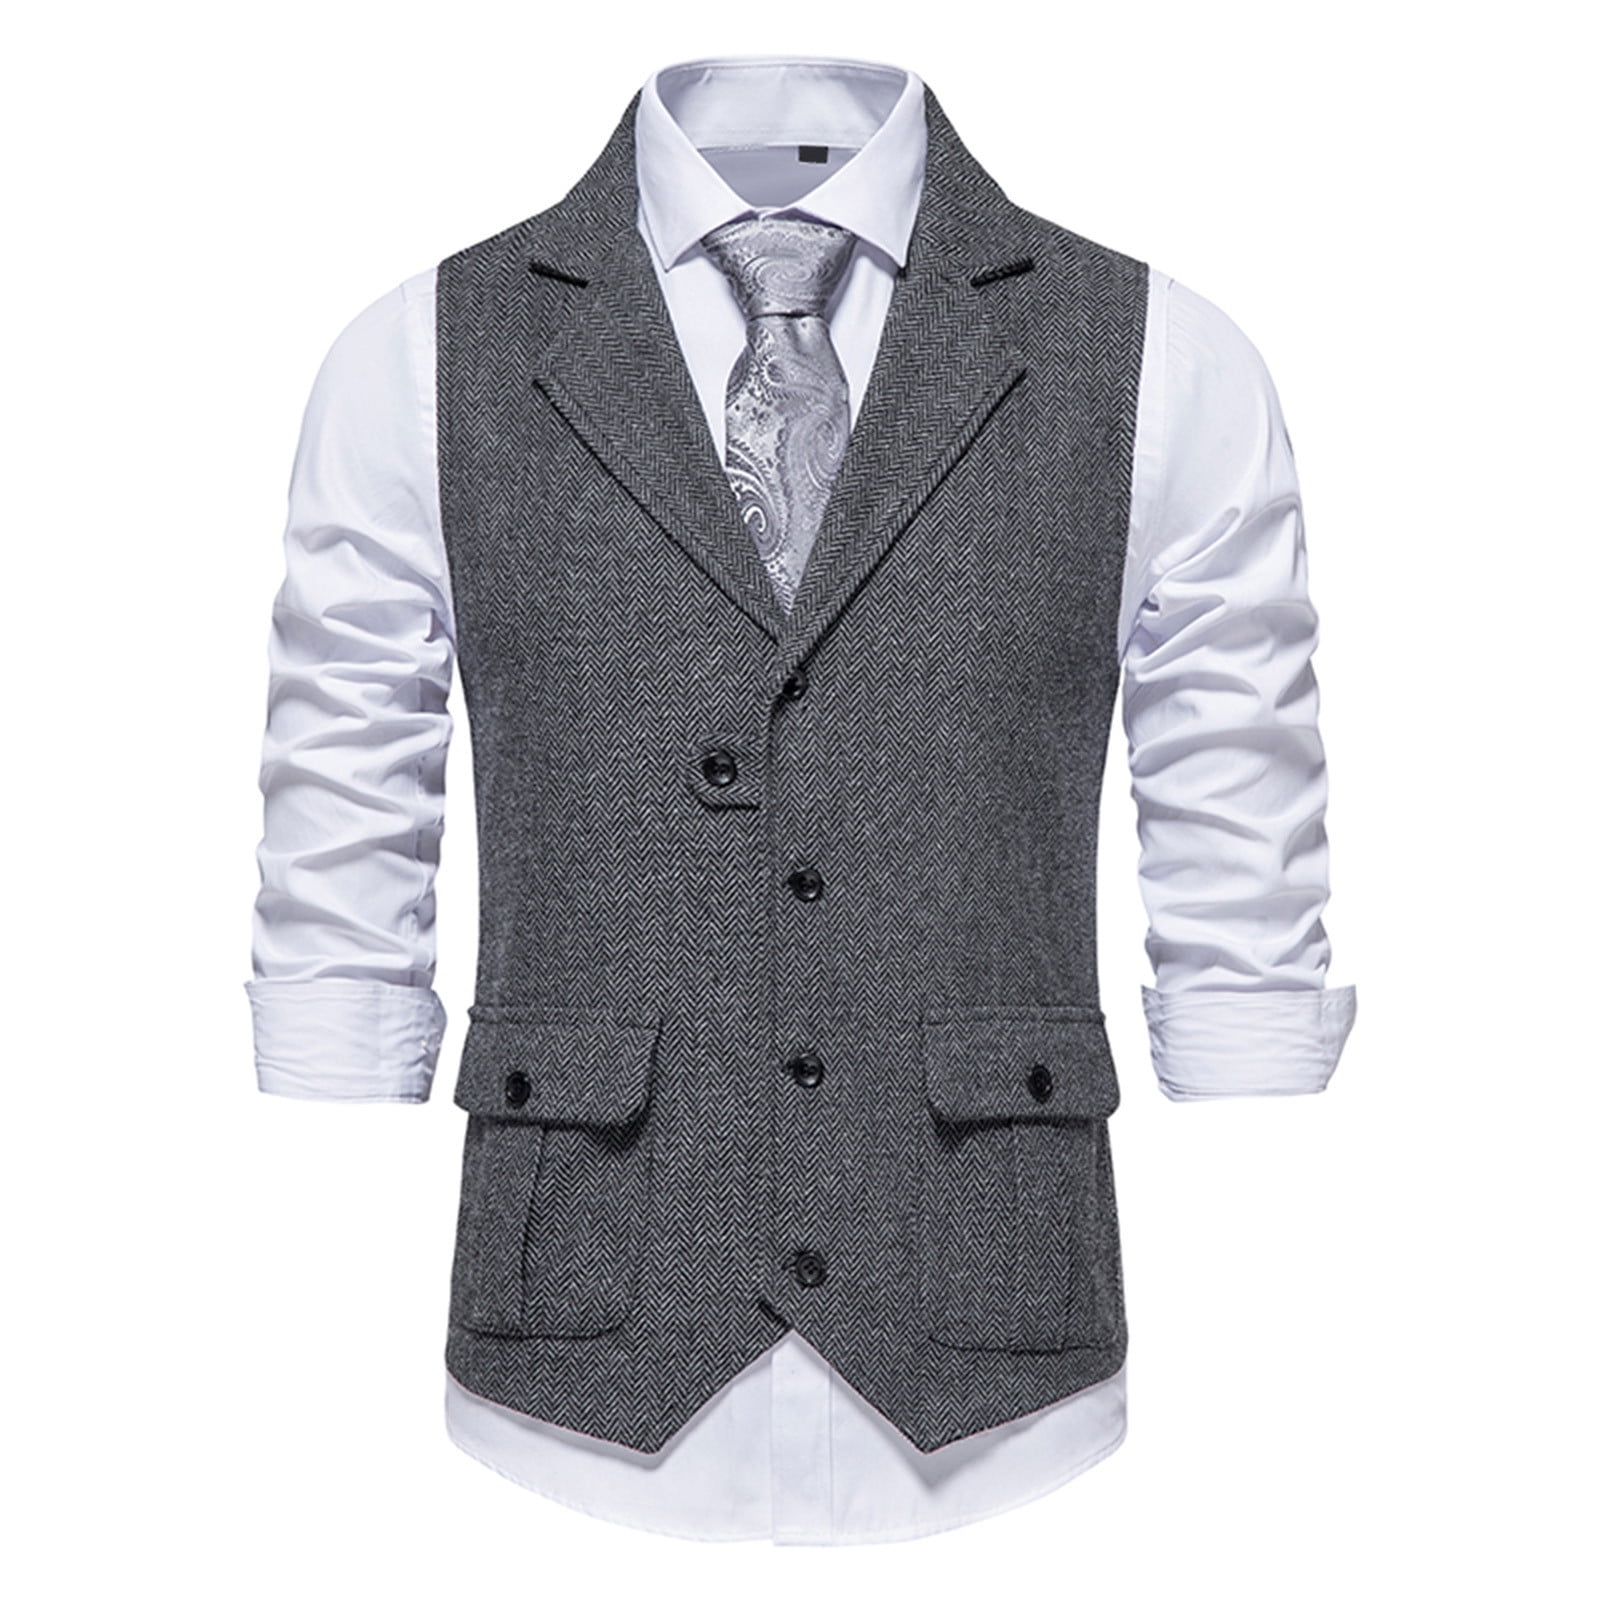 Odeerbi Blazer for Men Herringbone Tweed Suit Vest Vintage Lapel Vest ...